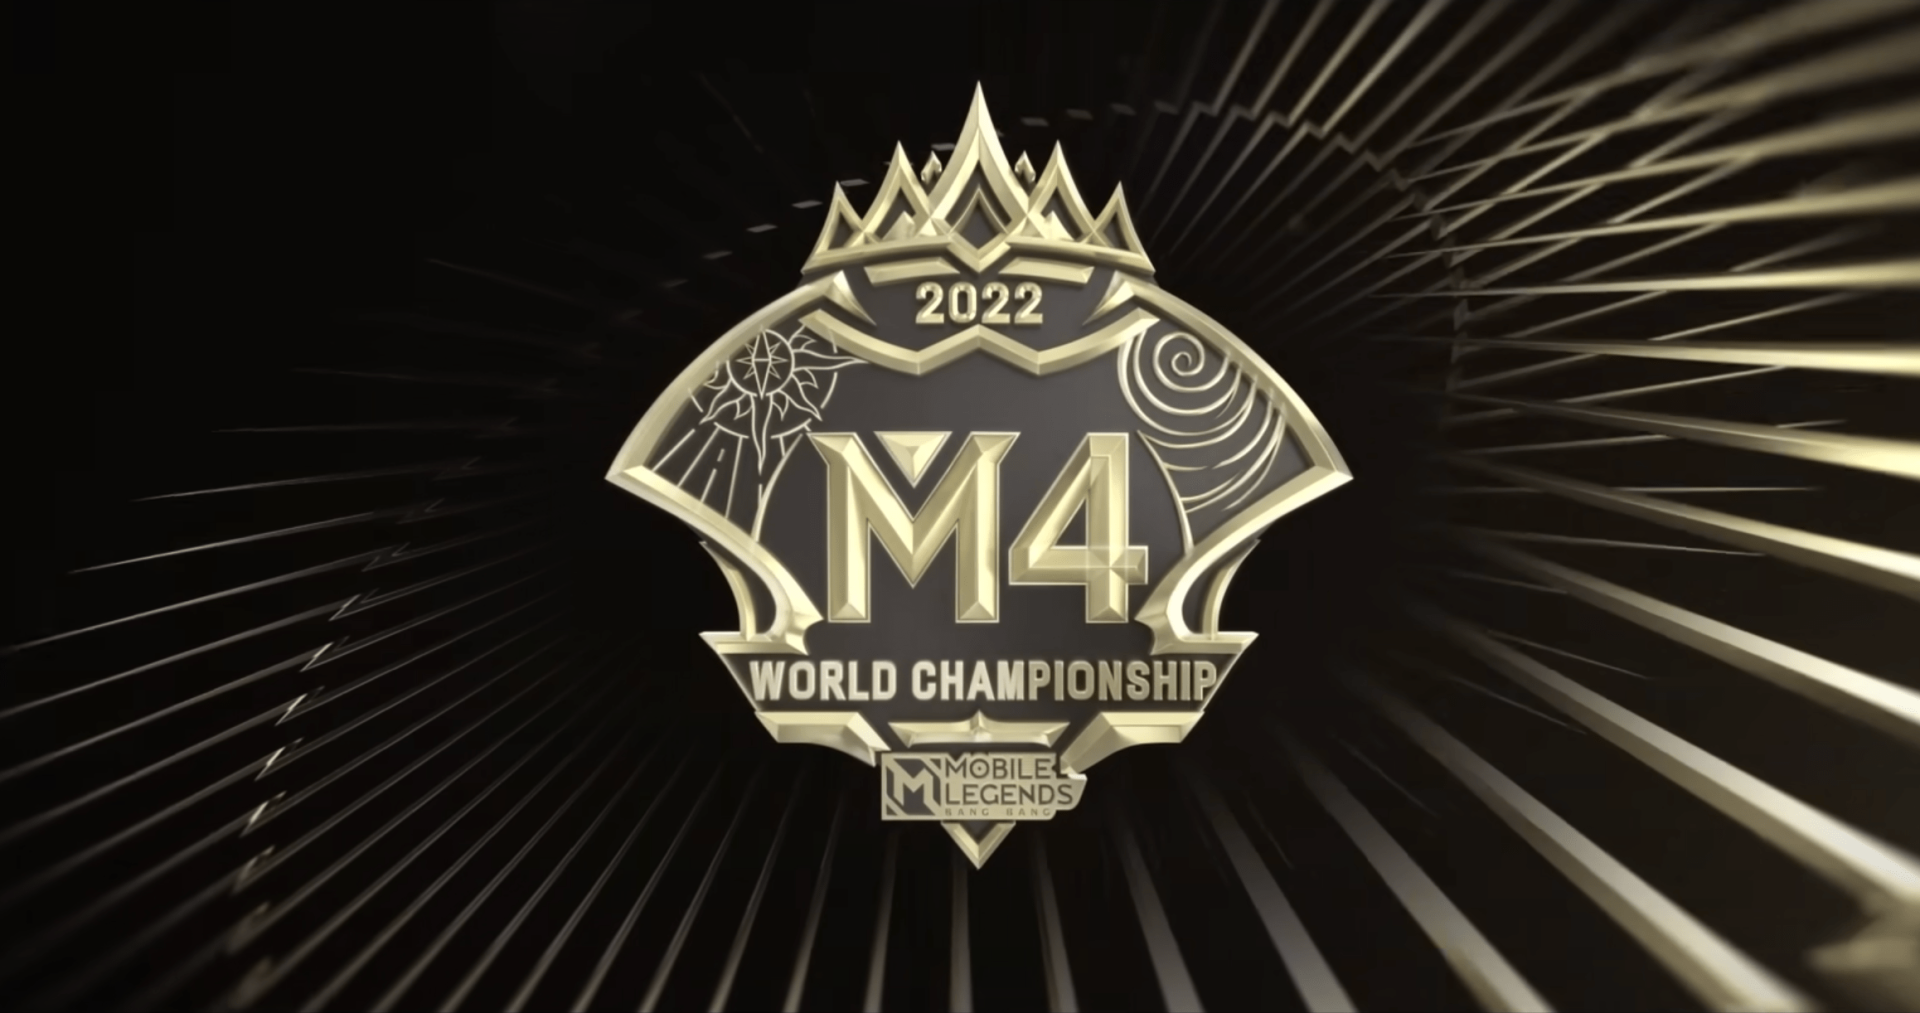 M5 World Championship Group Stage - Day 1 Viewership Statistics